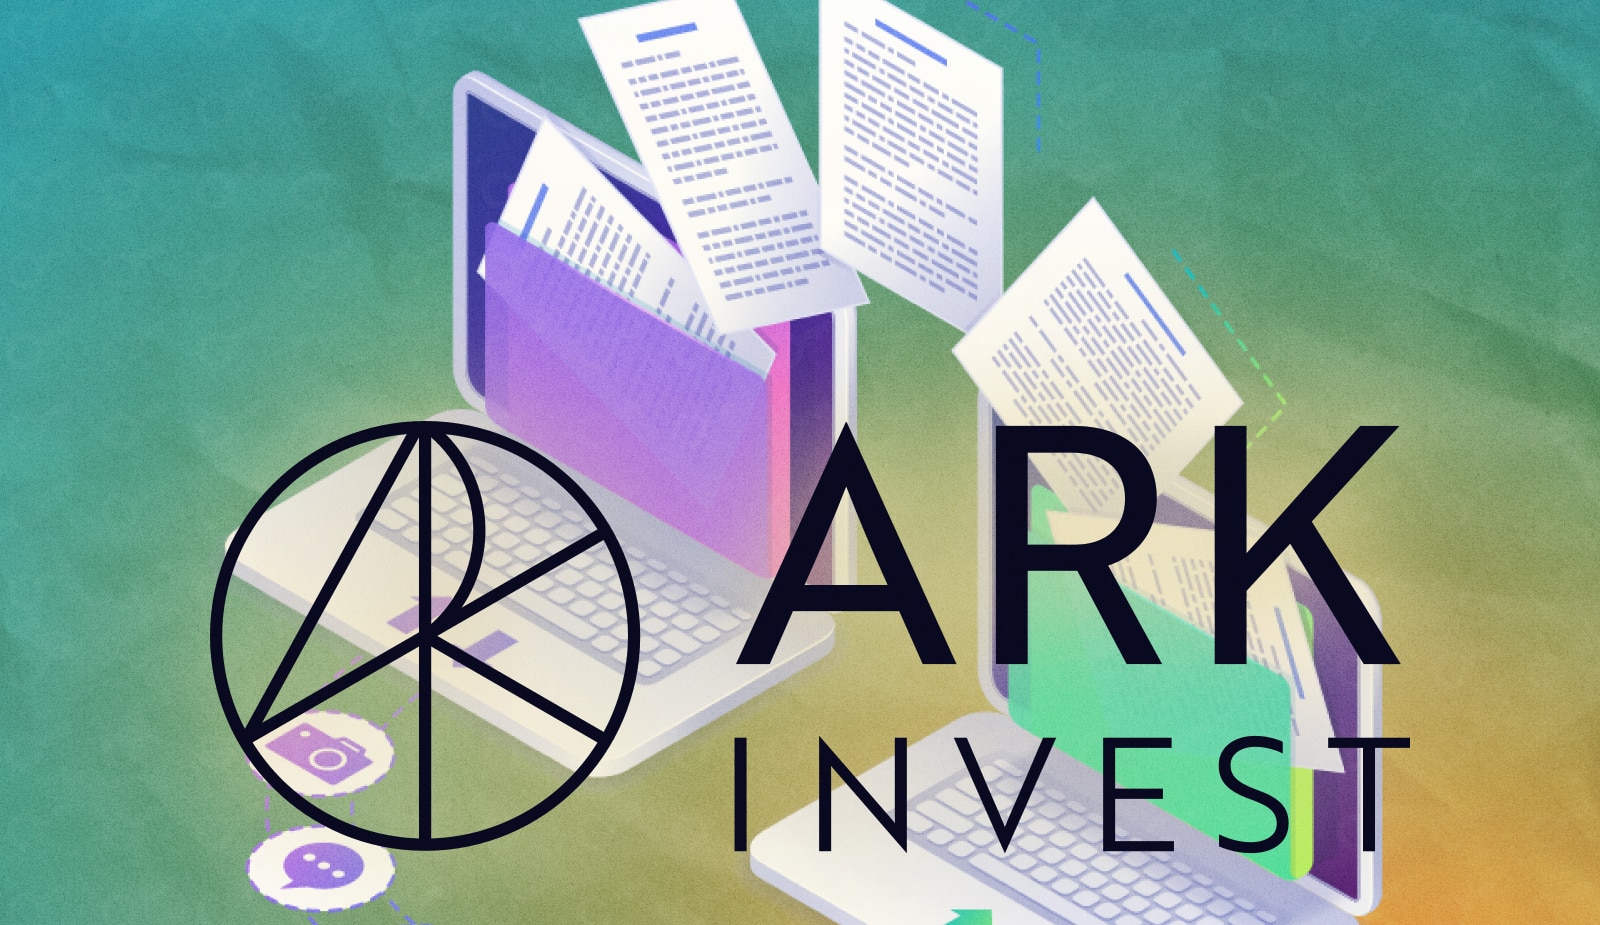 Компания Ark Invest купила акций на сумму $722 000